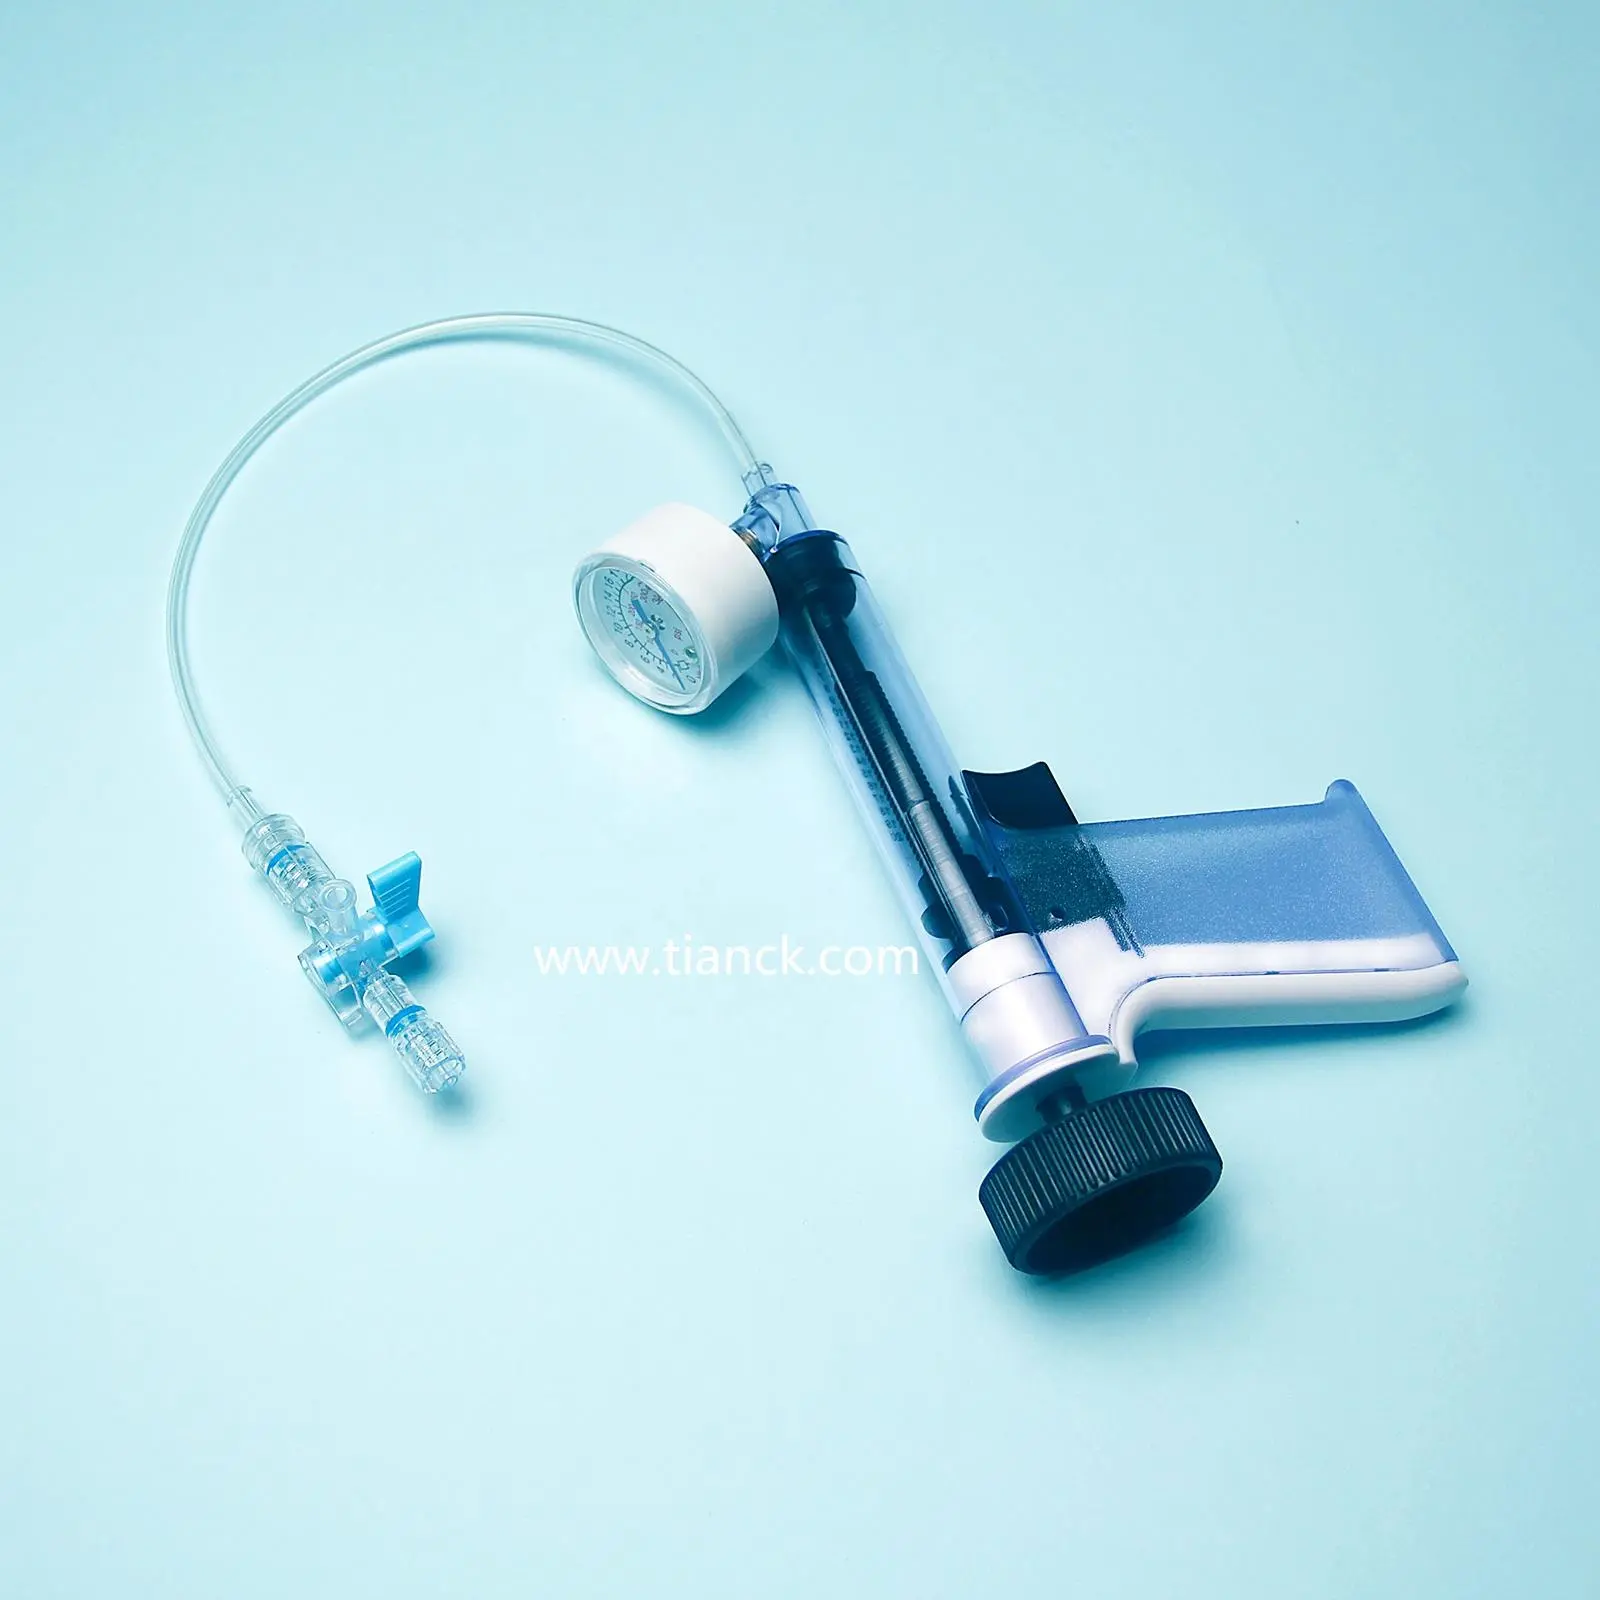 Tianck medical medical pump inflator ptca cardiology balloon inflation devices manufacturer